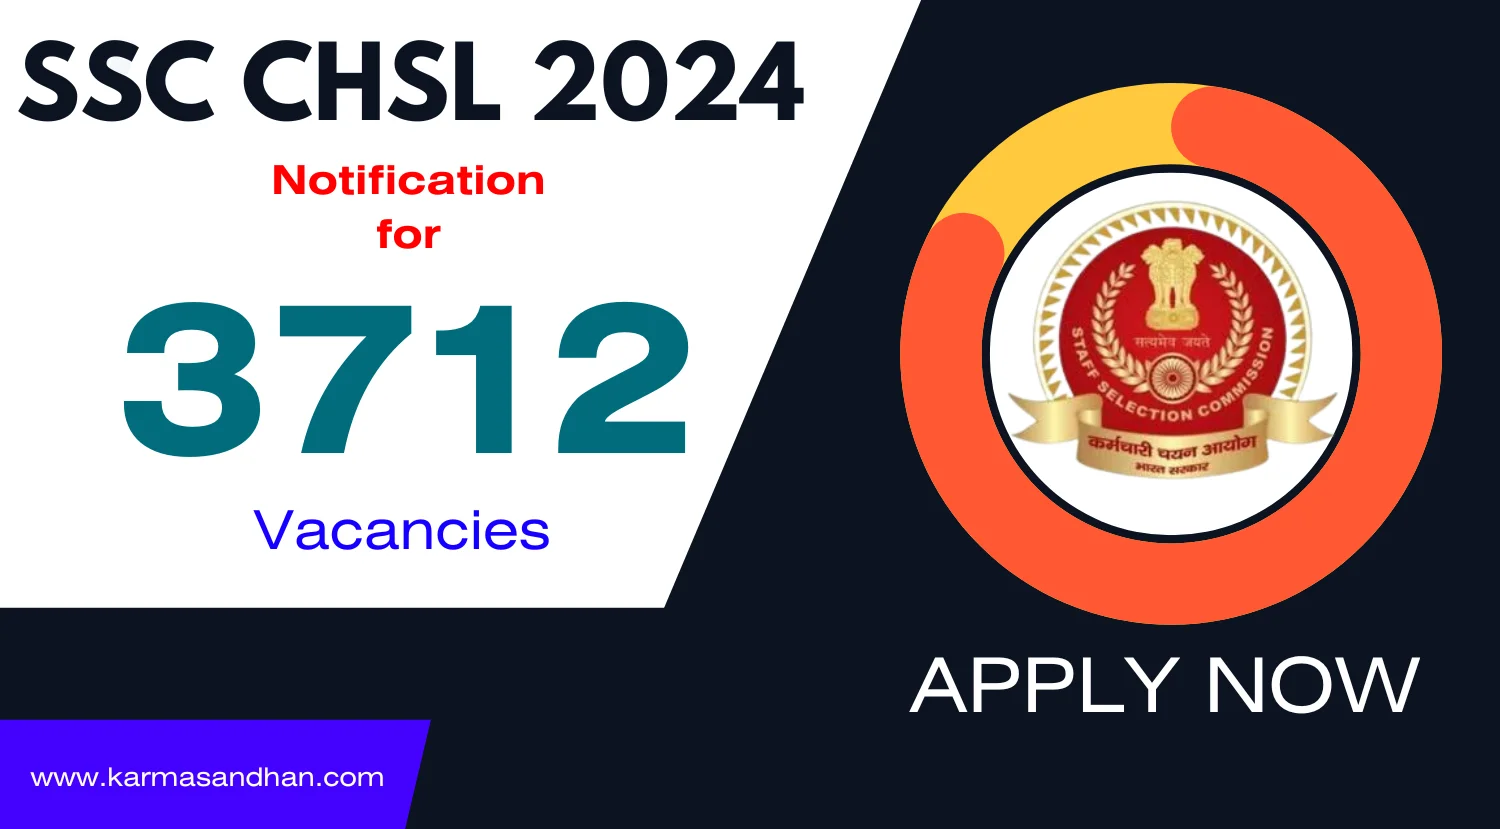 SSC CHSL 2024 Notification for 3712 Vacancies